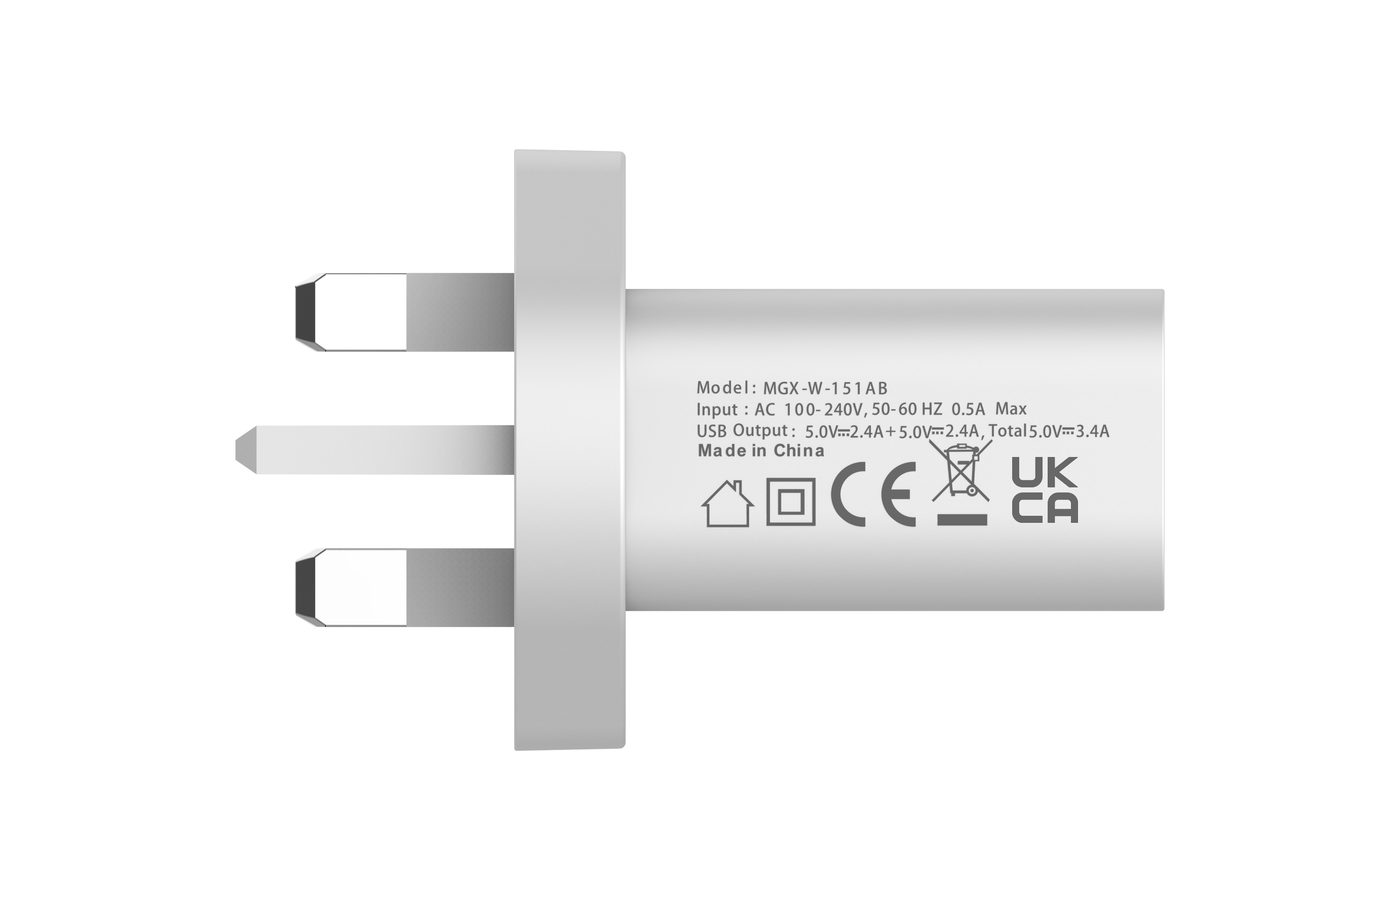 MAGIX 17W Wall Charger, Double USB Port 1A+2.4A - UK Plug